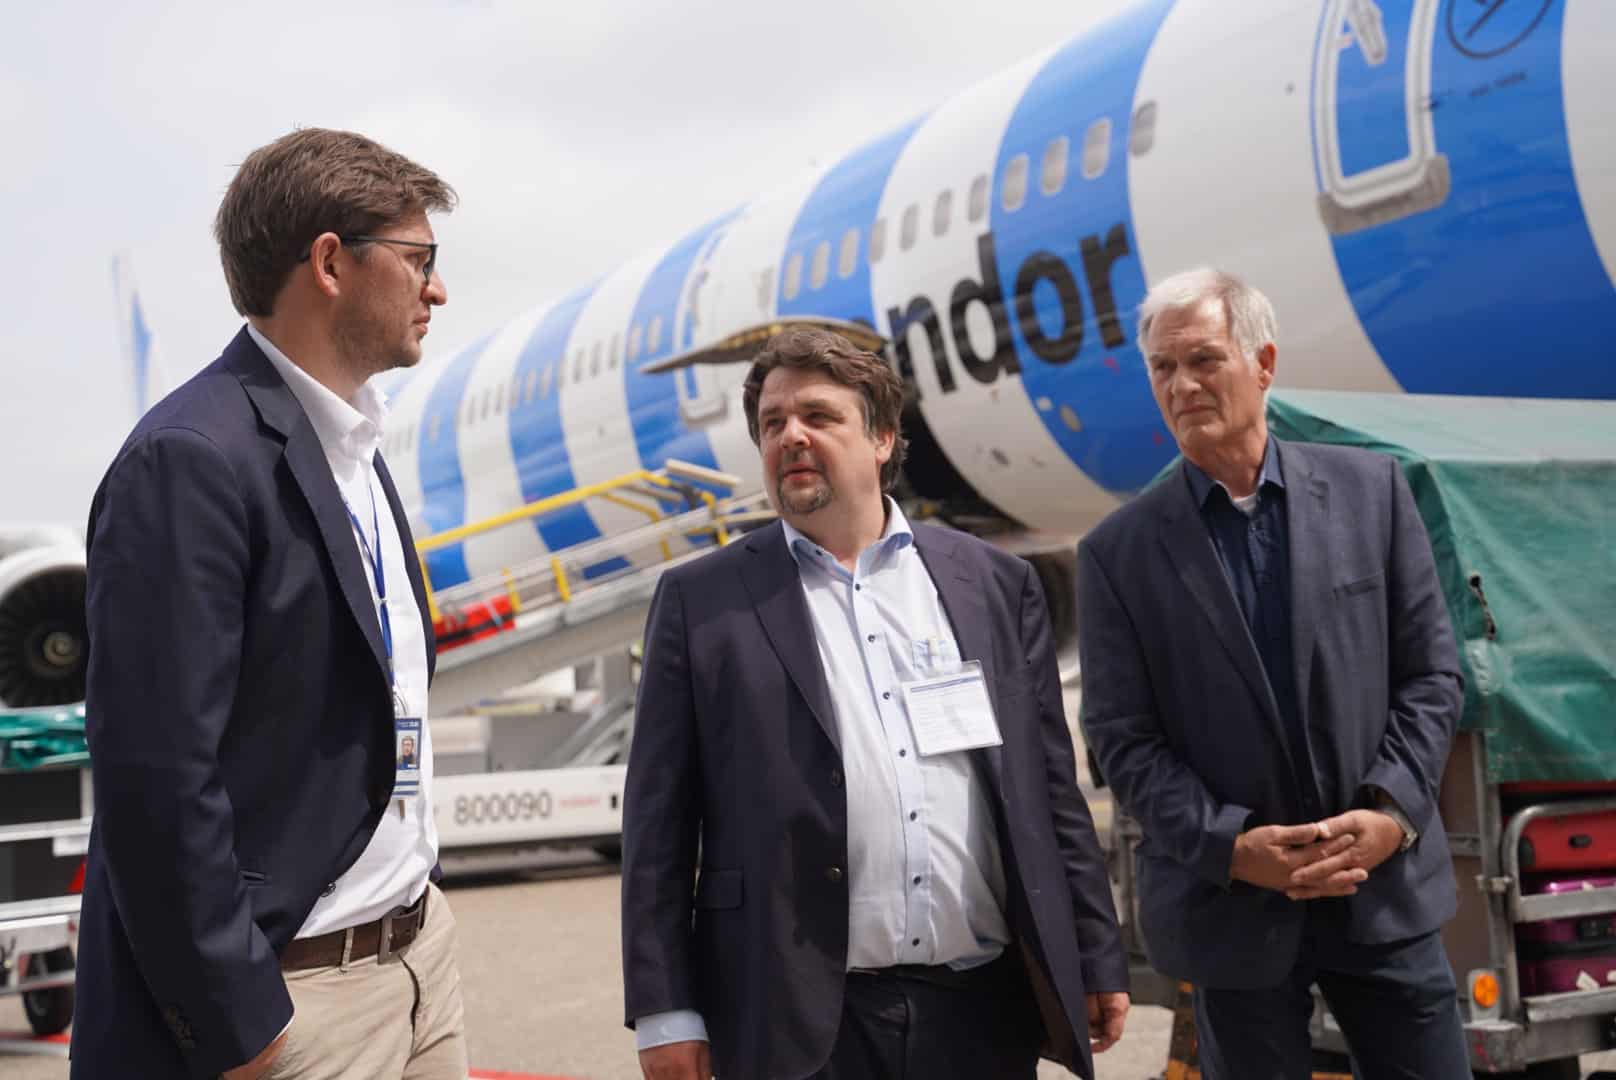 Dennis Radtke MEP في محادثة مع ممثلي إدارة المطار (من اليسار إلى اليمين): فابيان زاتشيل (رئيس الشؤون العامة) ، دينيس رادتك MEP (CDU) ، بيتر نينغلتن (مكتب حي المطار).